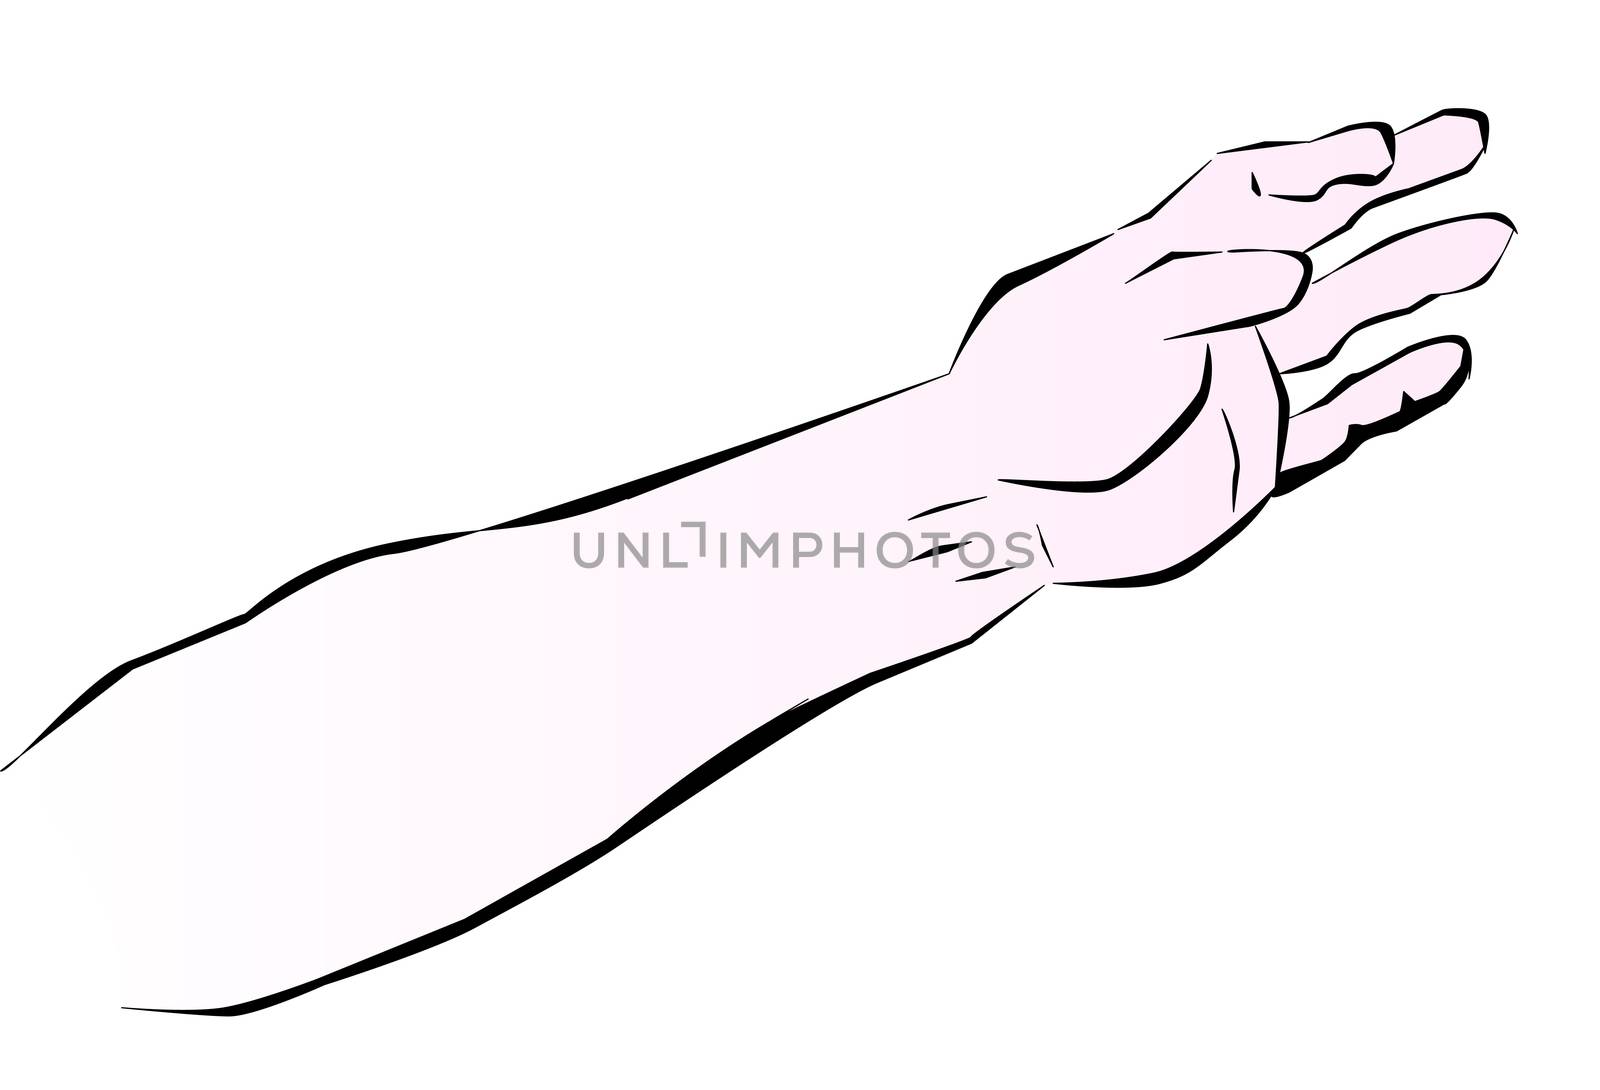 Sketch of a human arm based on sketch by Leonardo Da Vinci